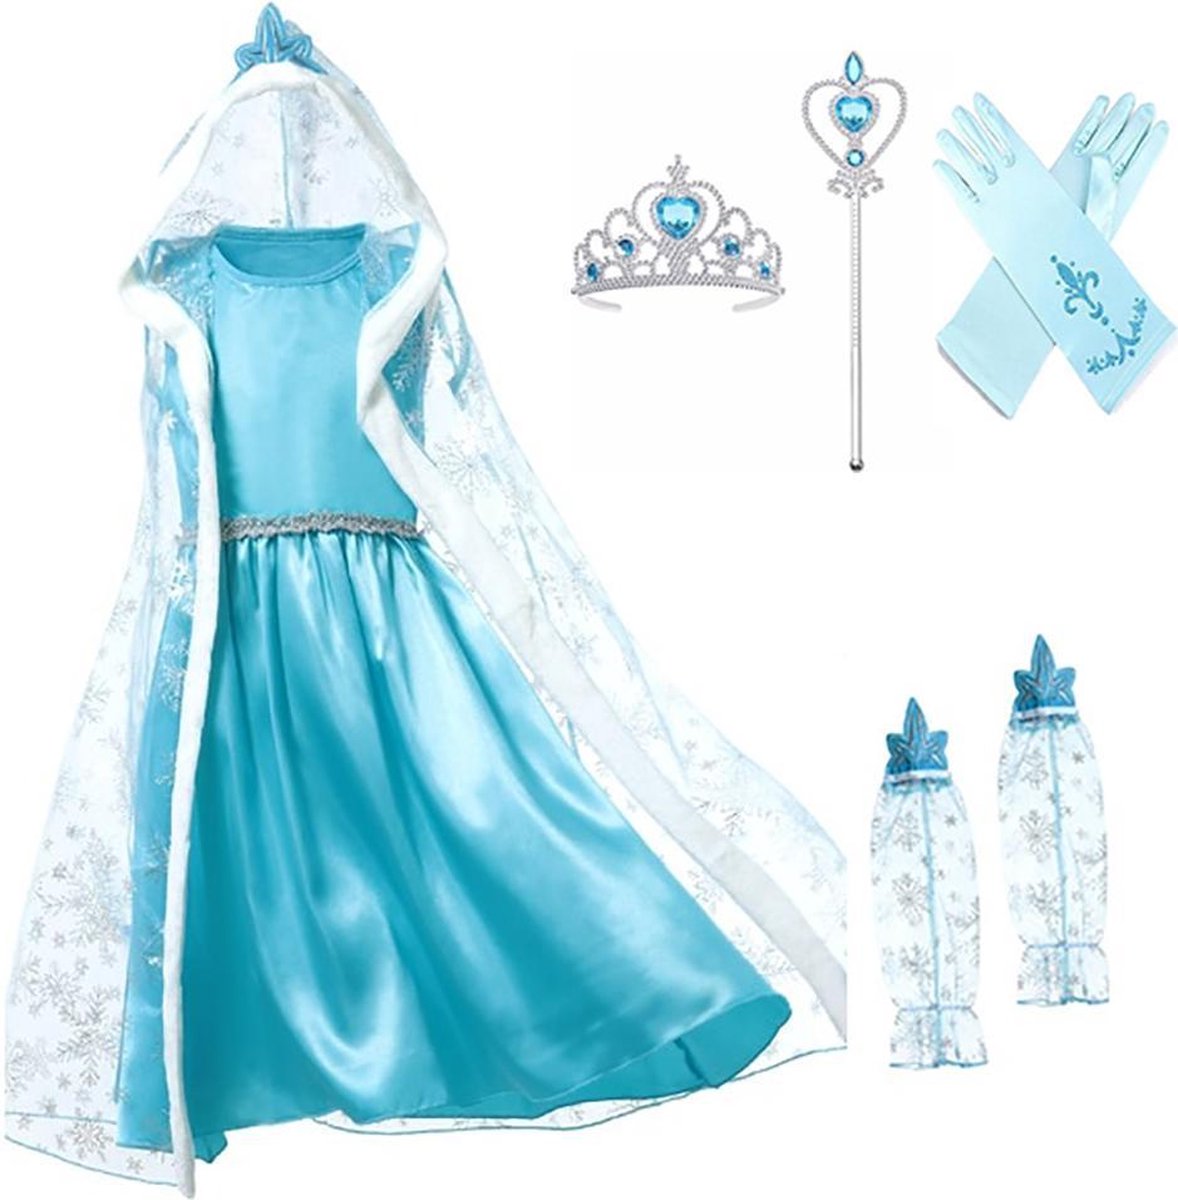 Het Betere Merk - Prinsessenjurk meisje - Blauwe jurk - maat 146/152 (150) - losse cape + mouwen - Tiara - Toverstaf prinses - Handschoenen - Carnavalskleding meisje - Verkleedkleren Kind - Cadeau meisje - Verjaardag - Prinsessen speelgoed